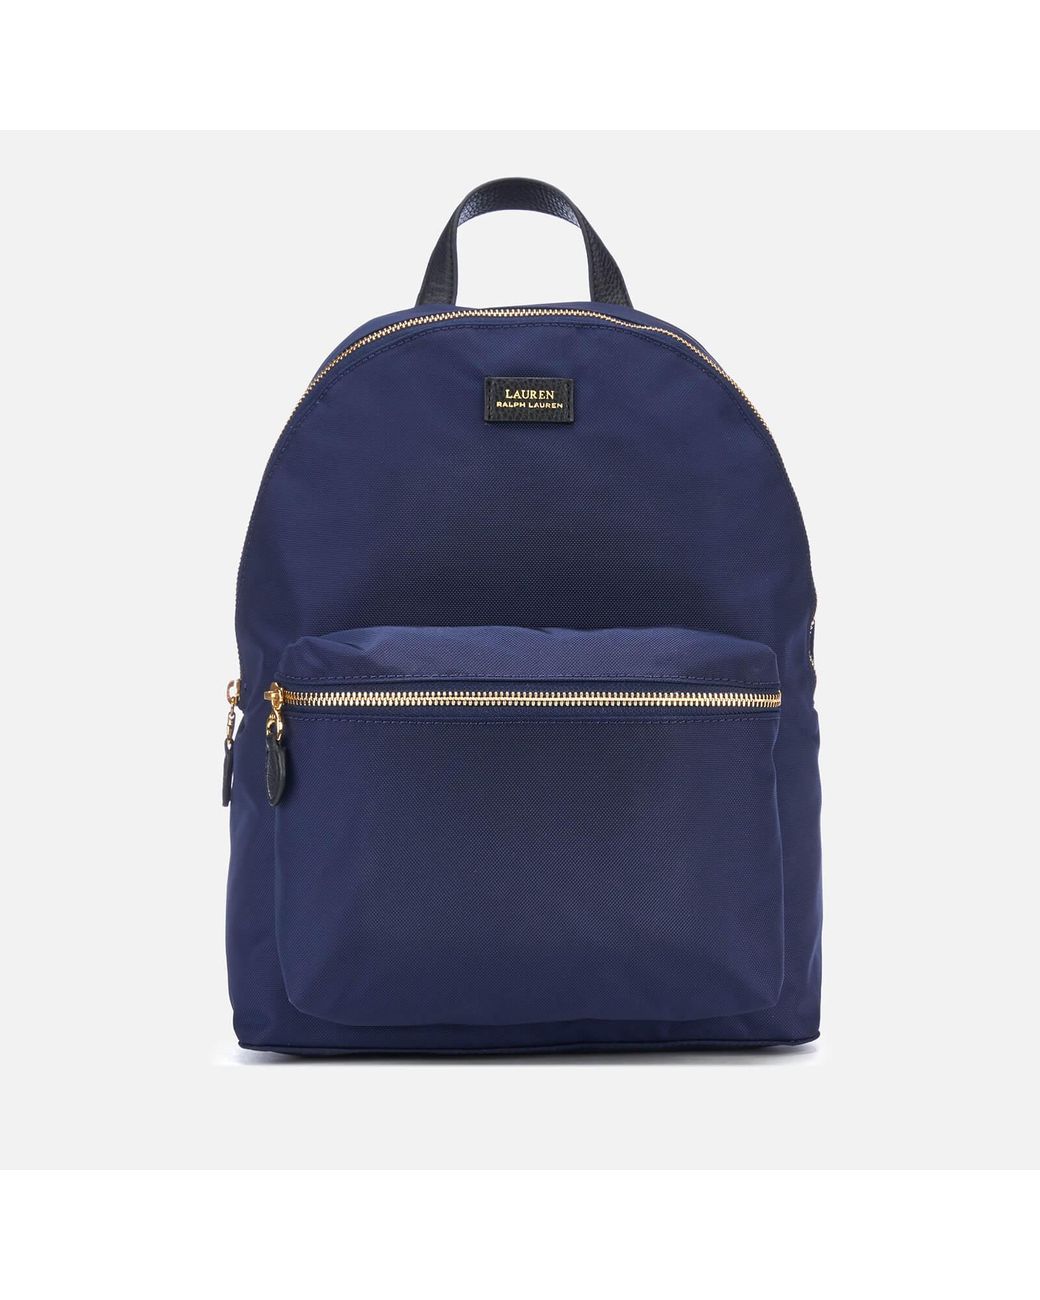 Lauren by Ralph Lauren Chadwick Medium Backpack in Blue | Lyst Australia